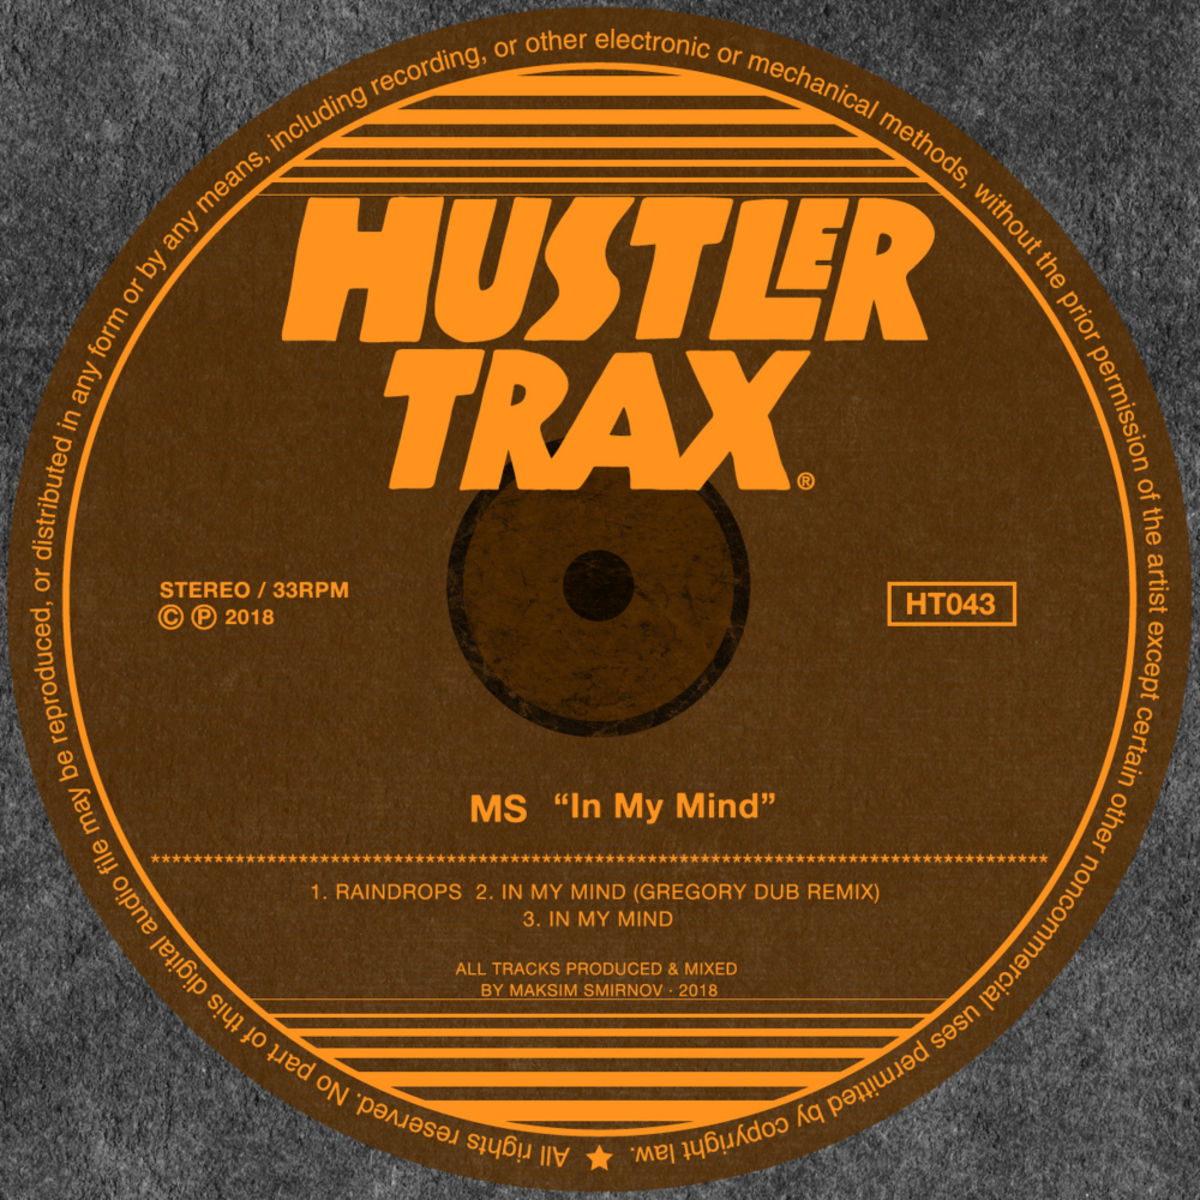 Ms - In My Mind / Hustler Trax